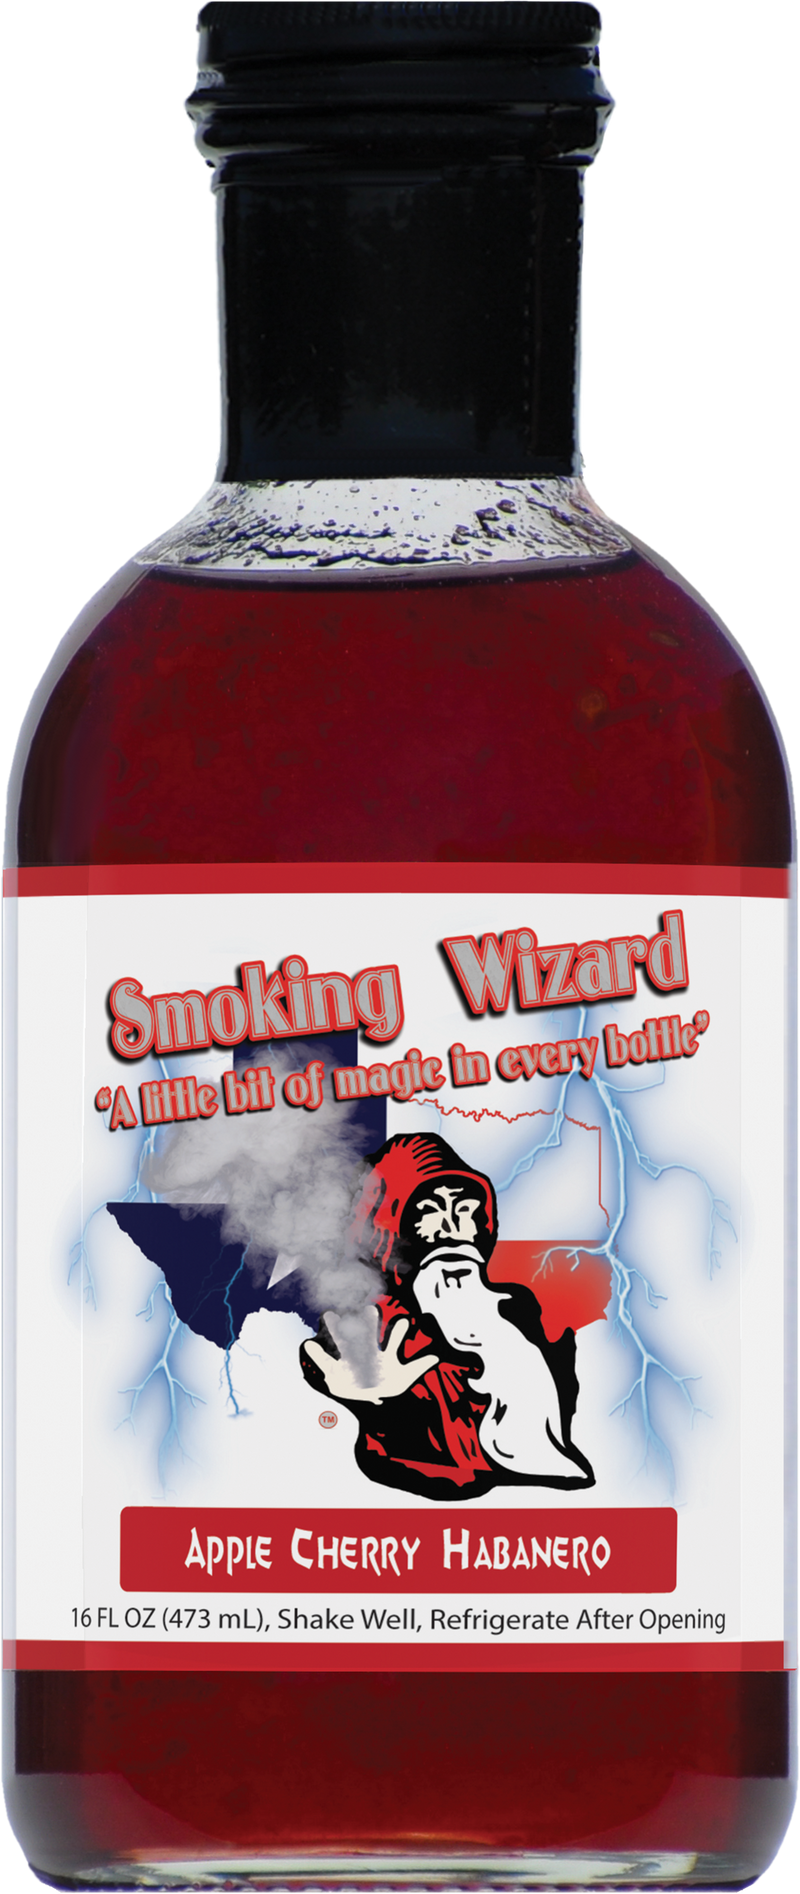 Smoking Wizard Apple Cherry Habanero Glaze